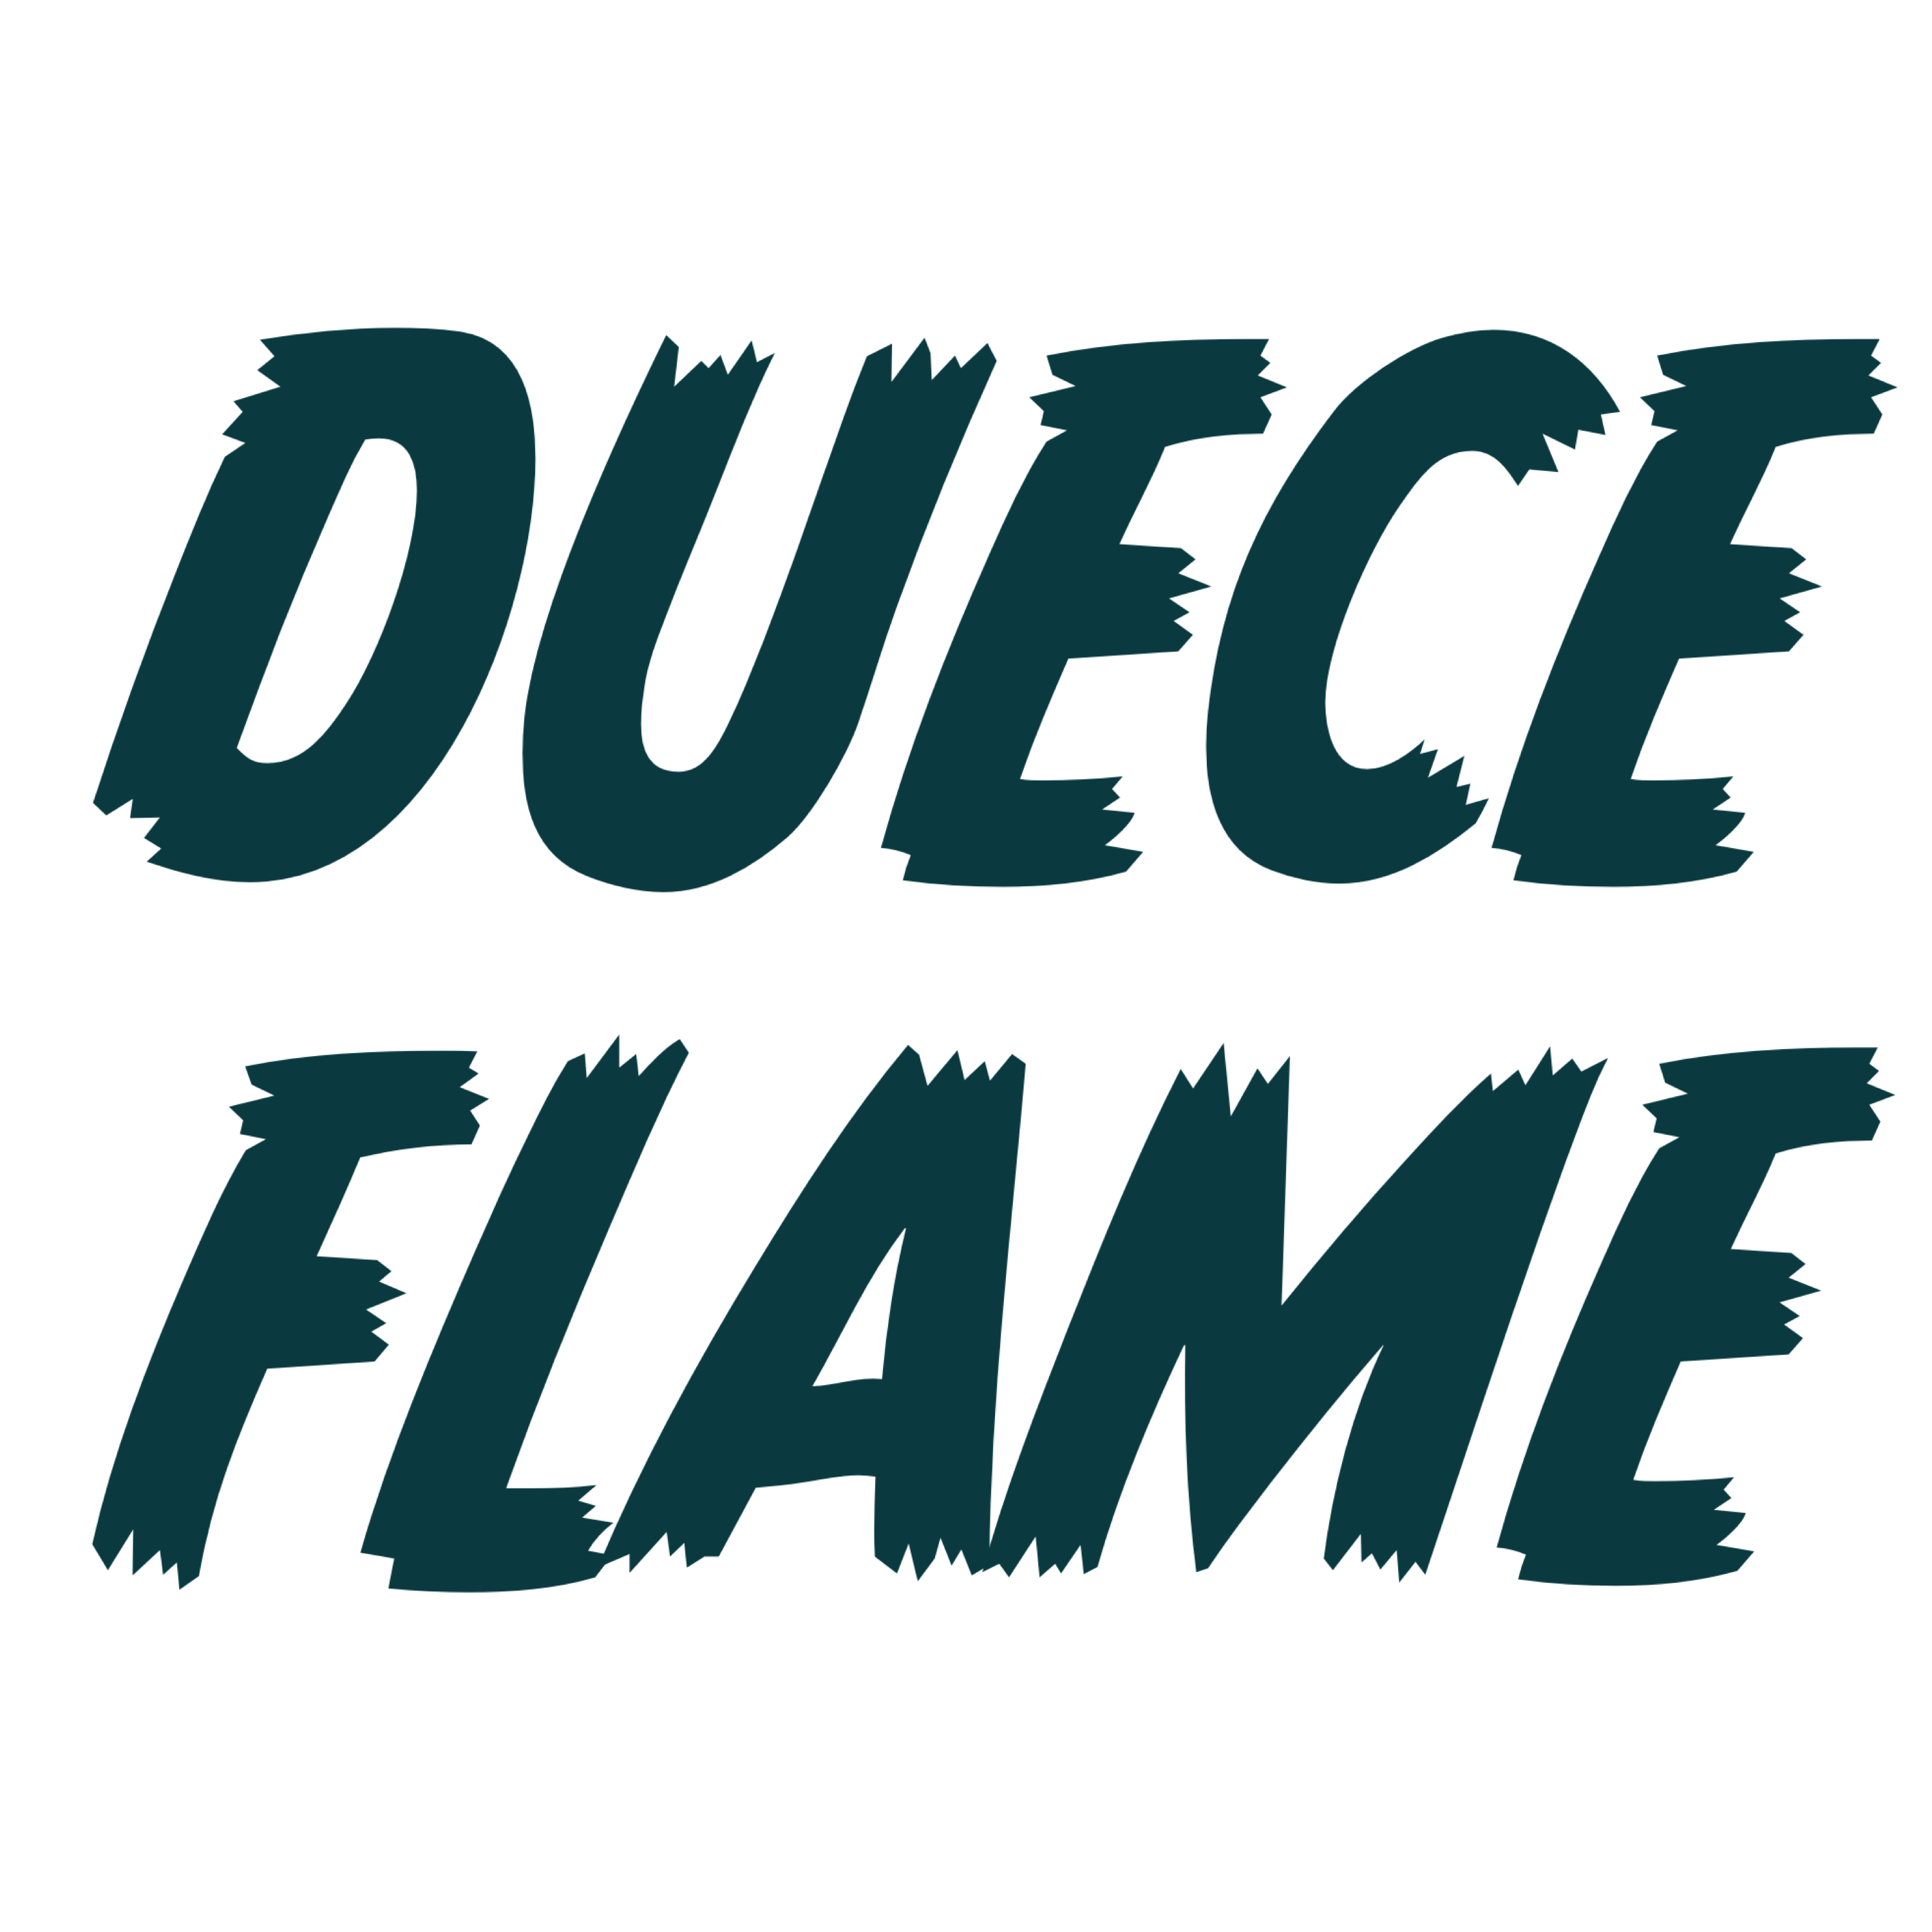 Duece Flame